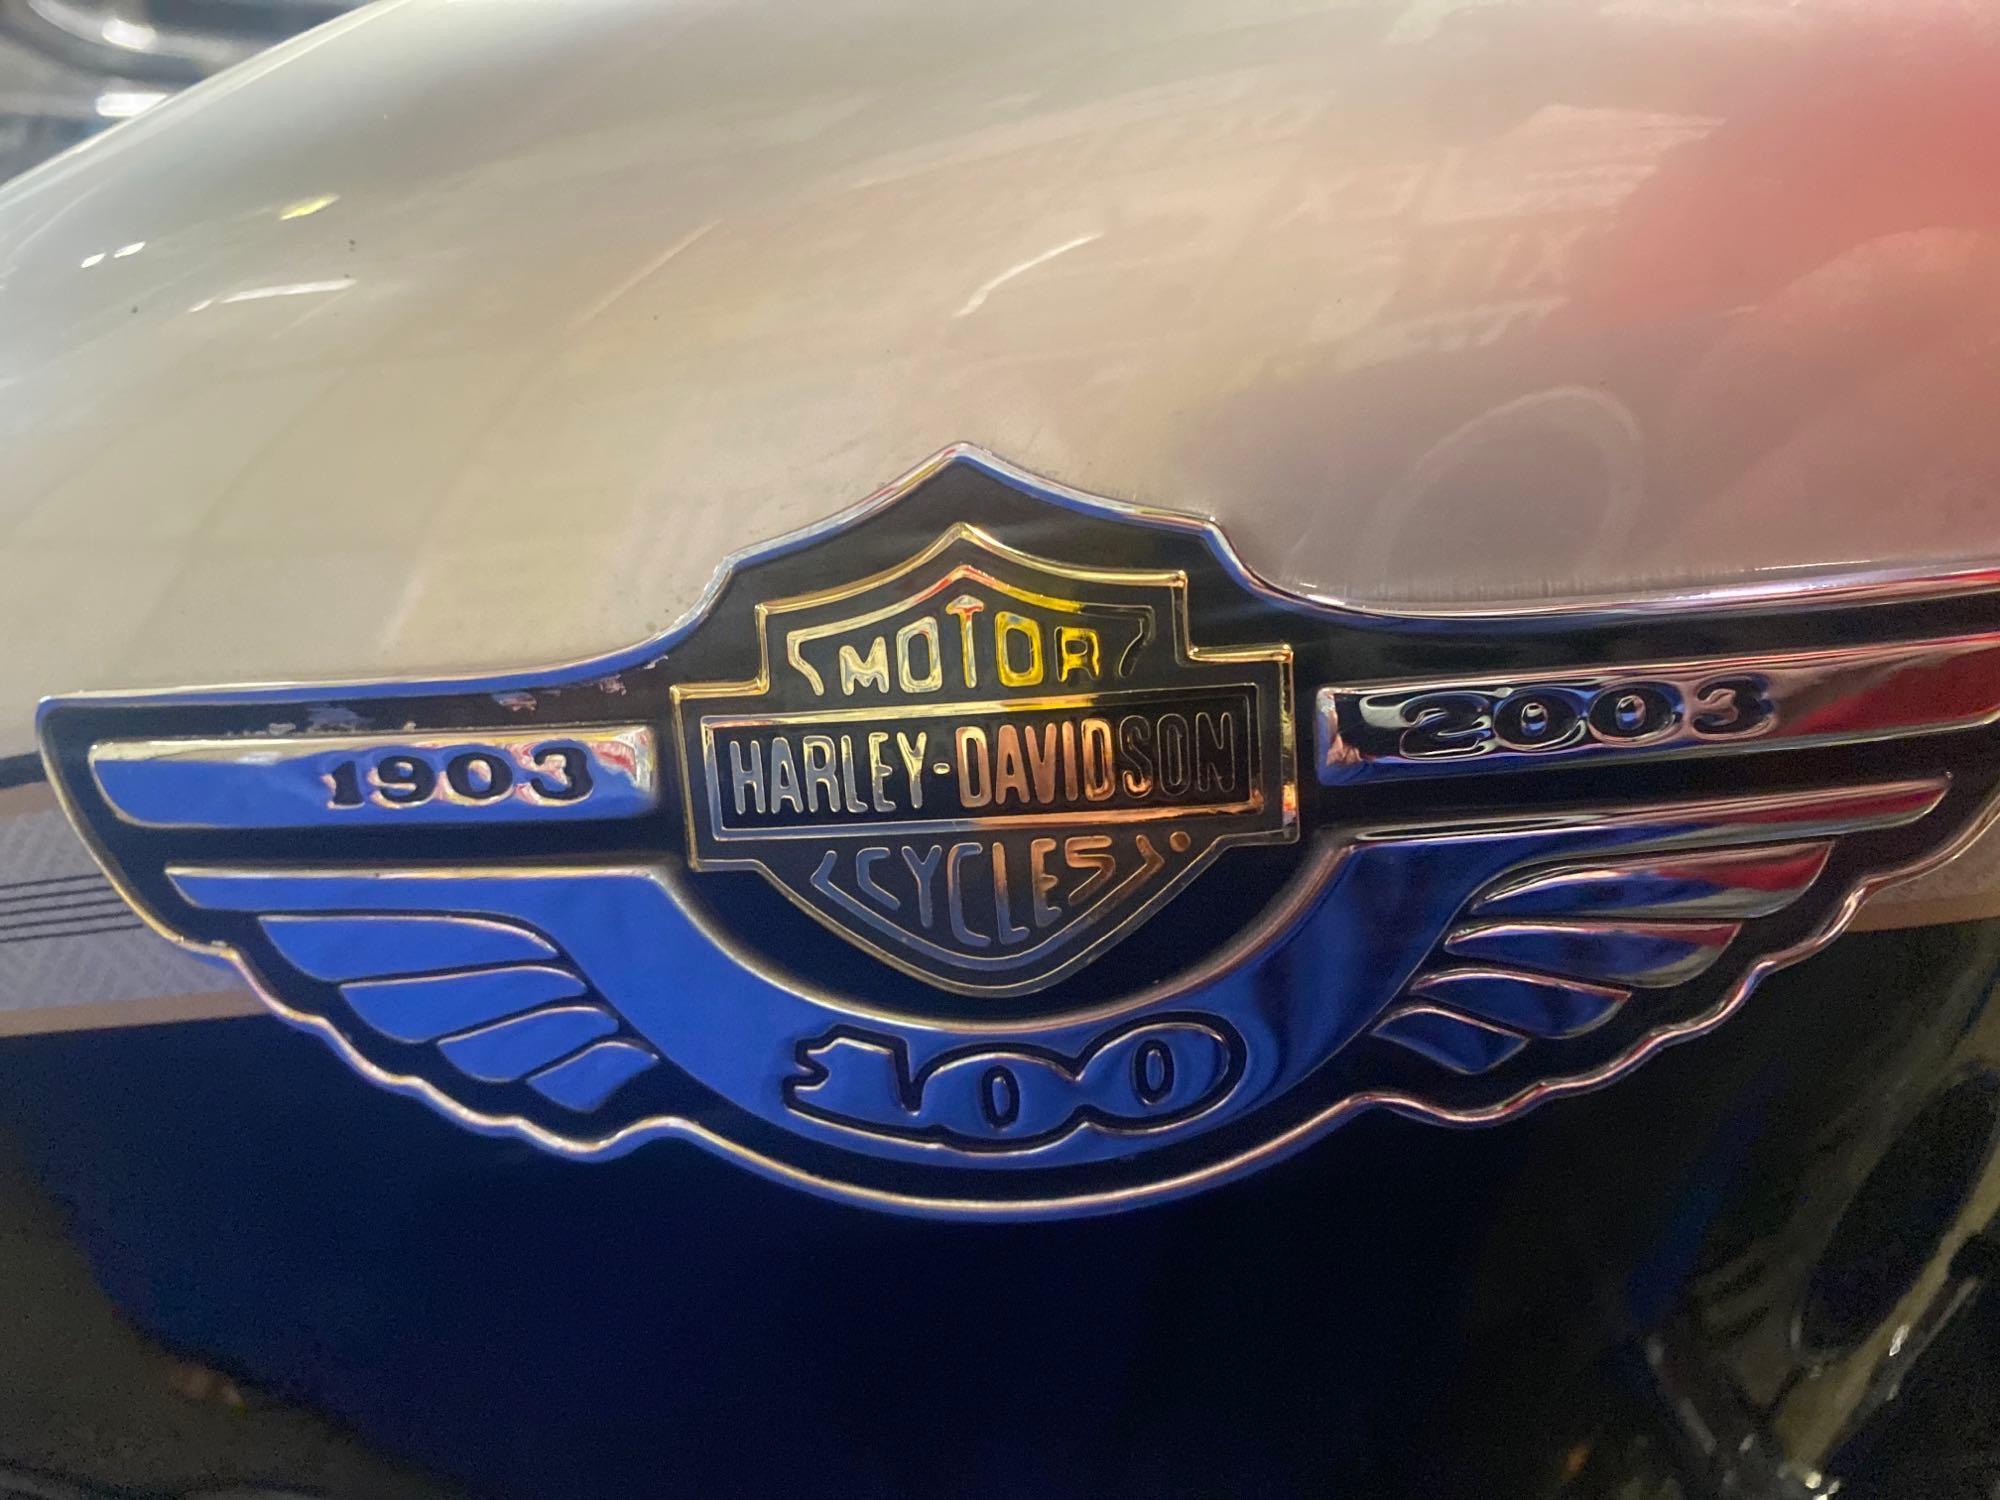 2003 Harley Davidson XL Sportster 883C Motorcycle (100th Anniversary)